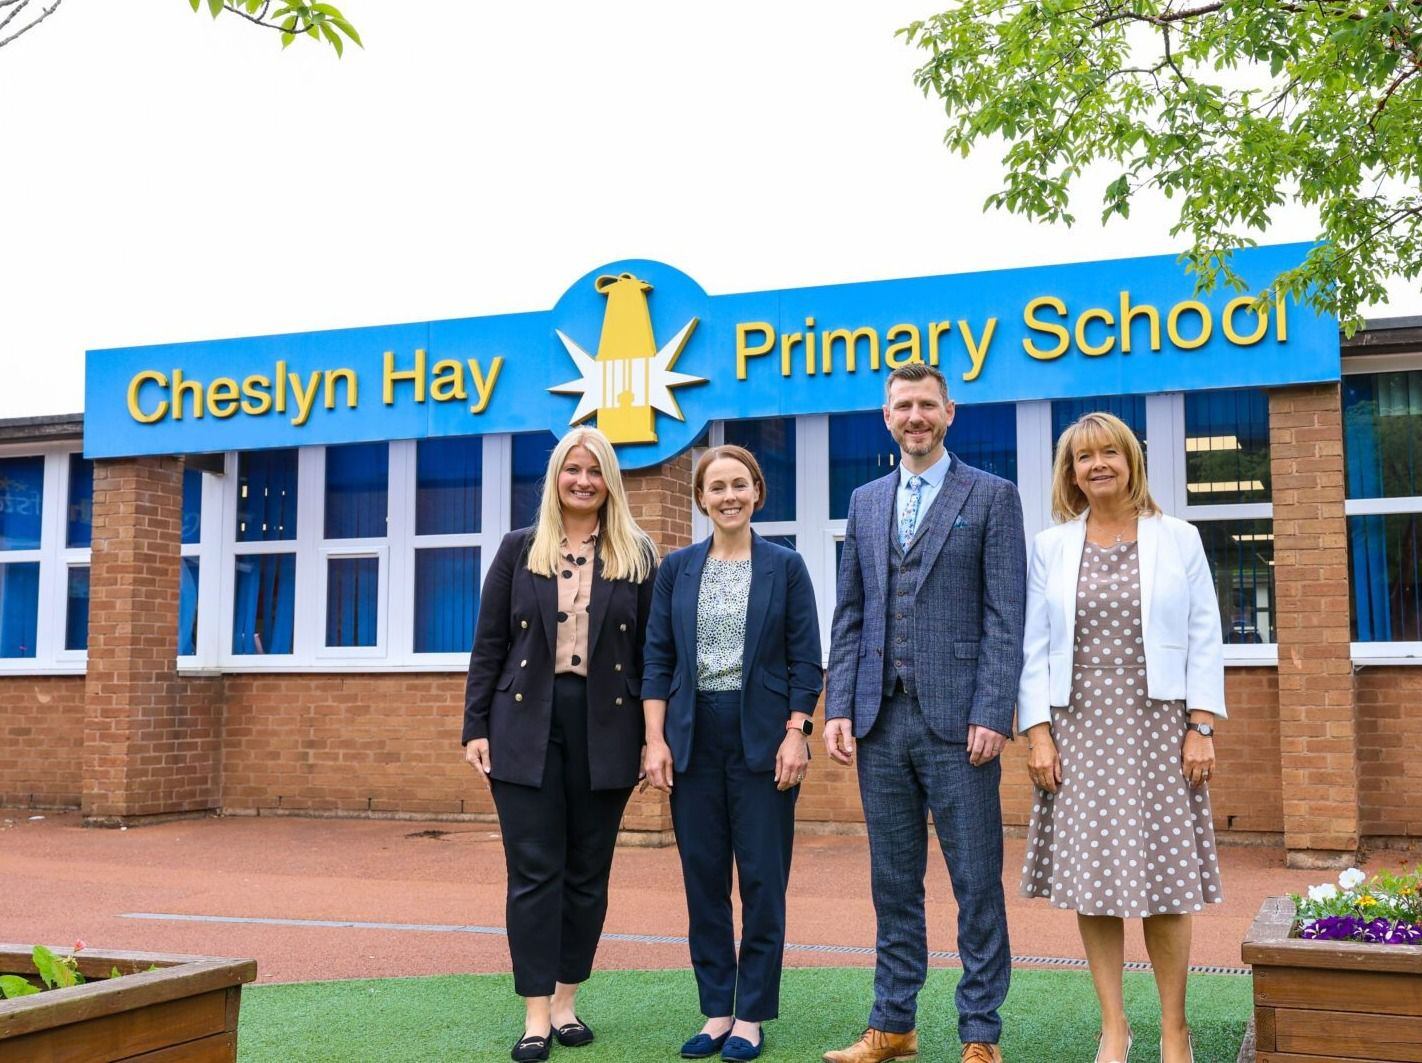 Moving education forward: Primary school added to trust's portfolio